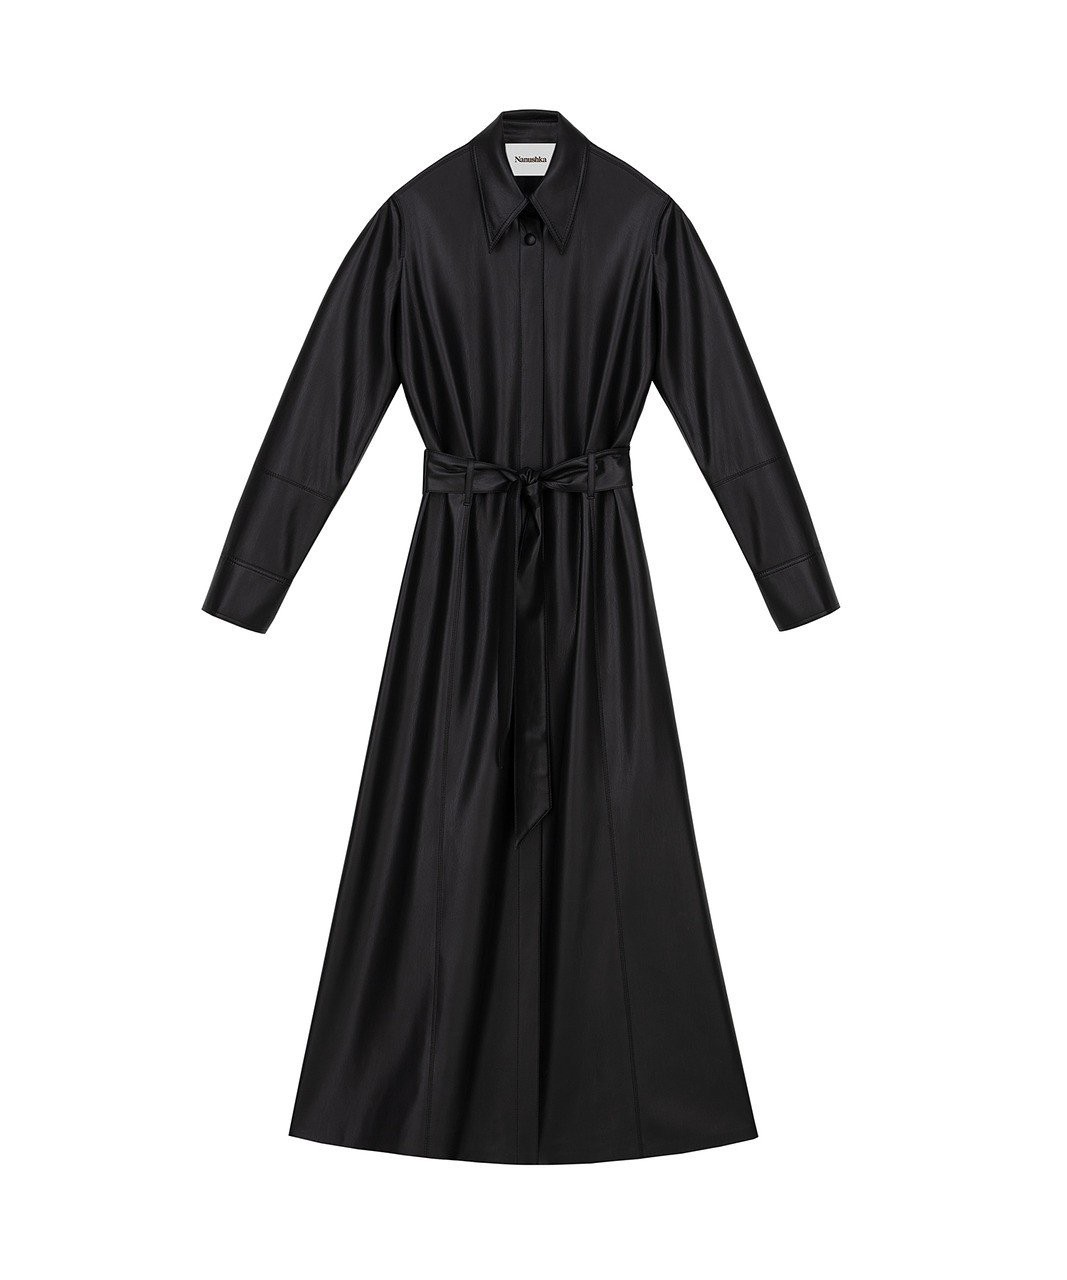 nanushka-asayo-vegan-leather-shirt-dress-black-9d38b9f145c7f90352156340ef44.jpg